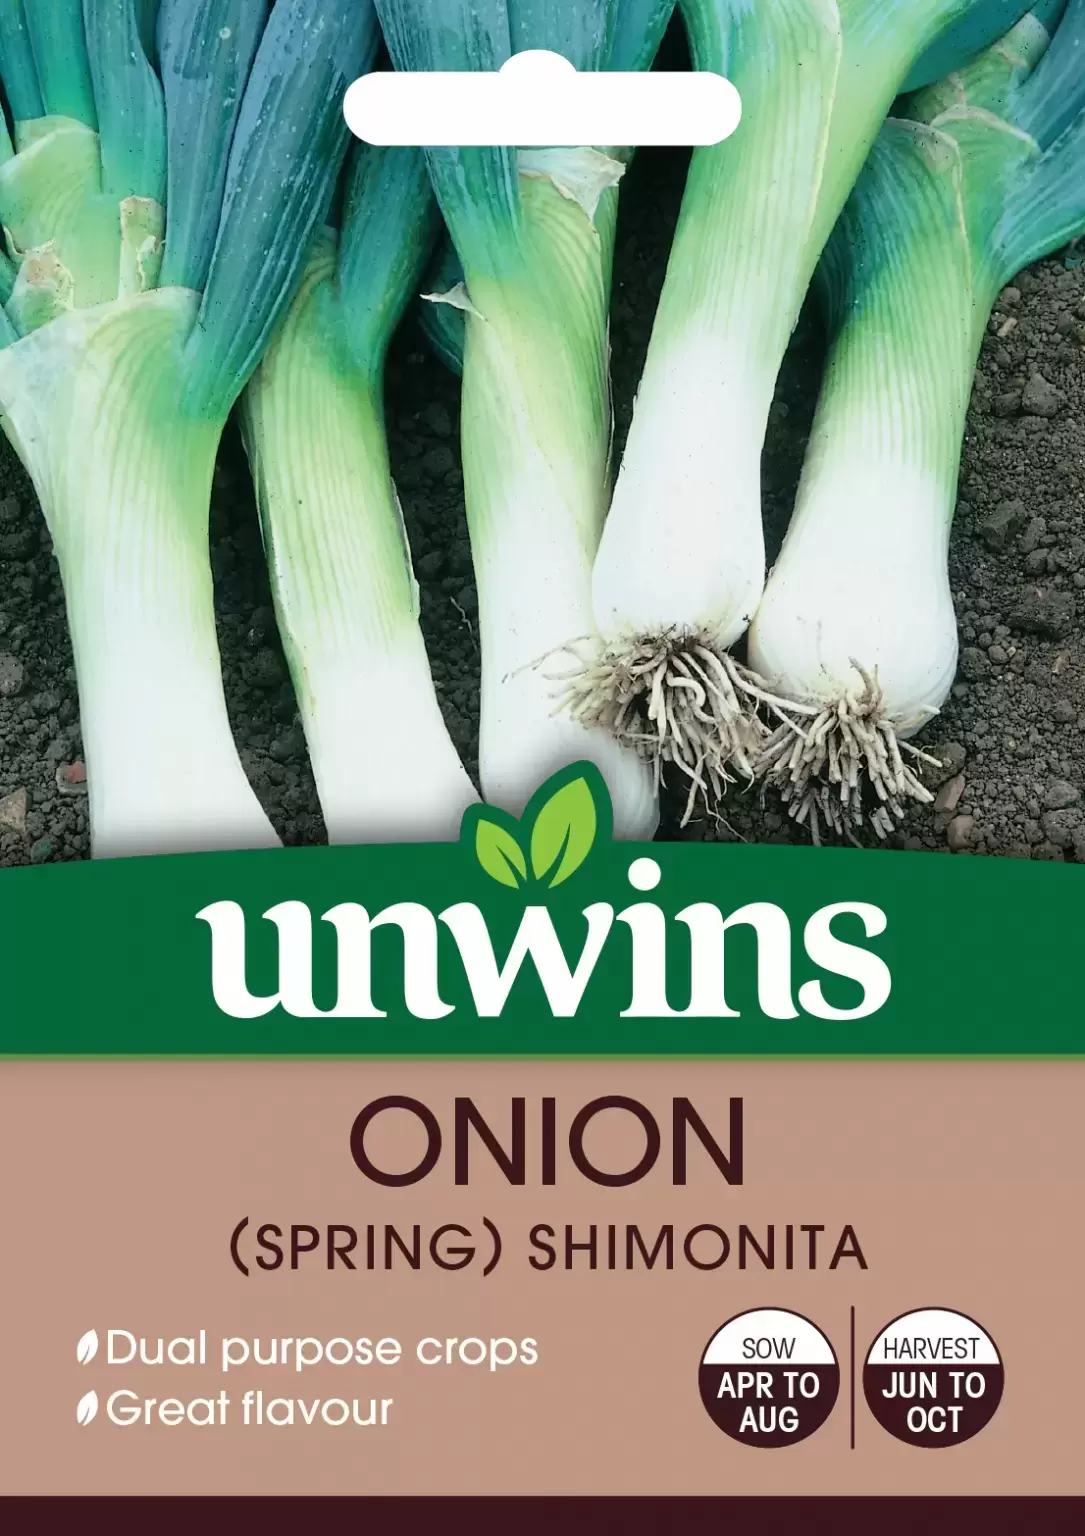 Onion Spring Shimonita from Fernhill IE